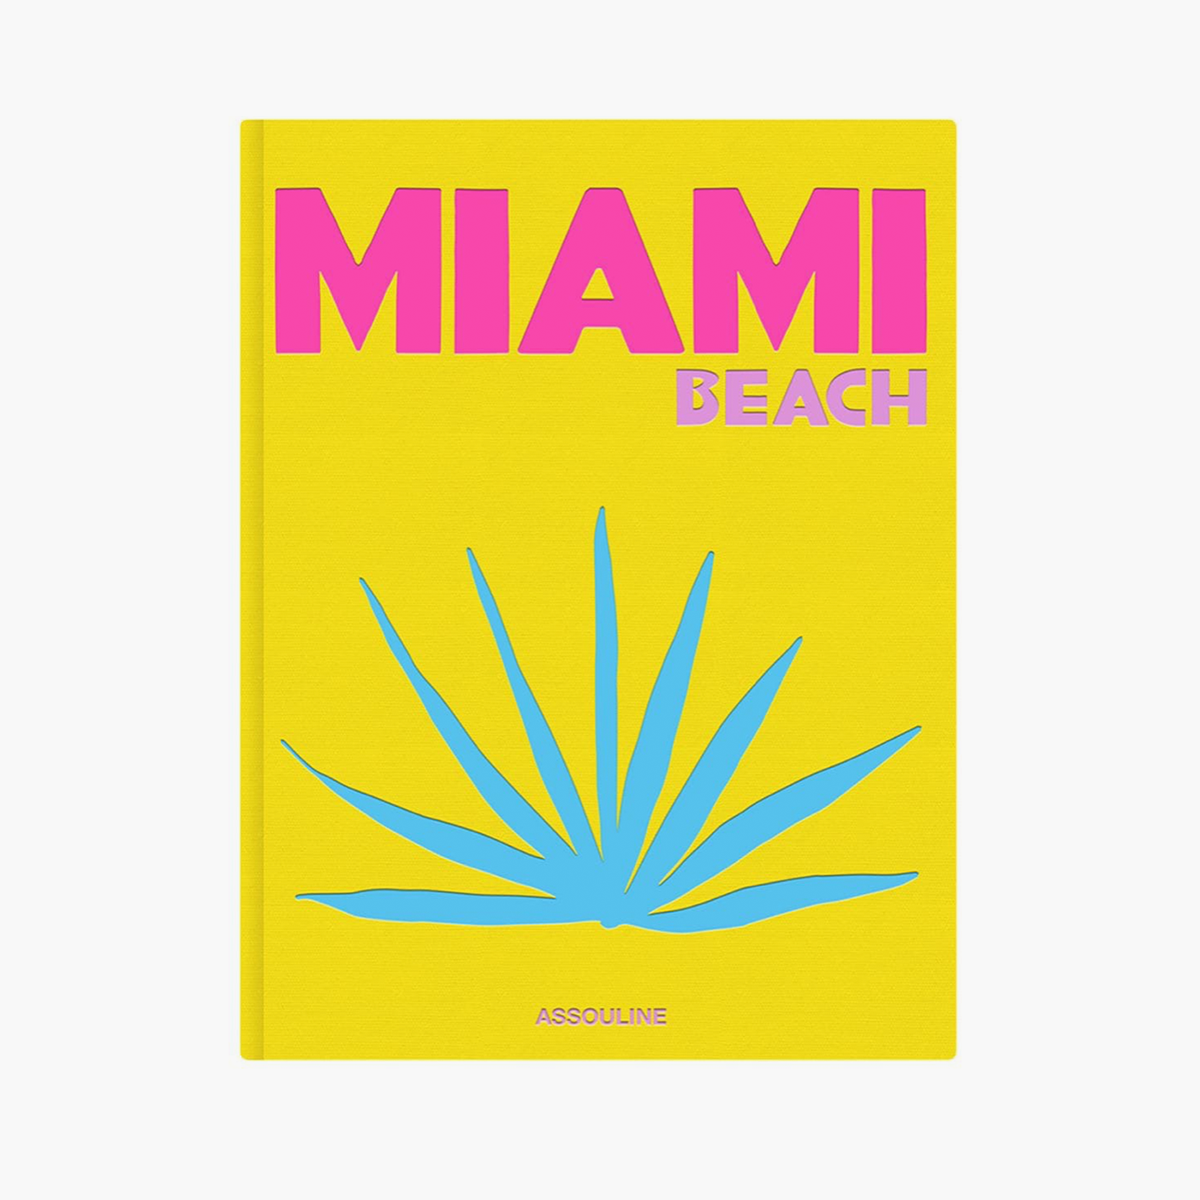 Книга Miami Beach Assouline 7790 рублей farfetch.com